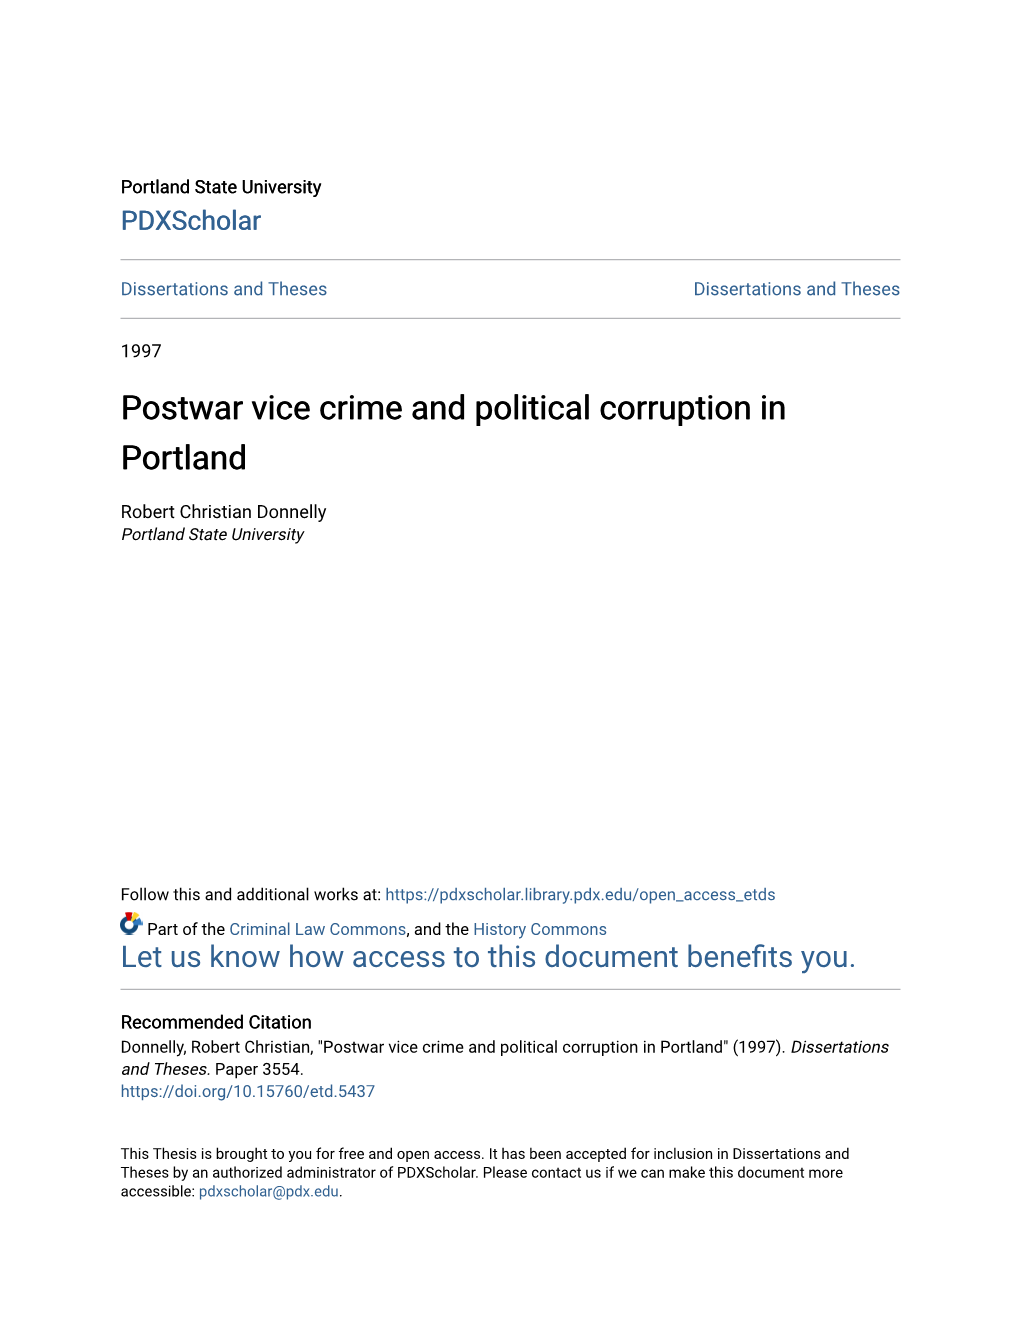 Postwar Vice Crime and Political Corruption in Portland